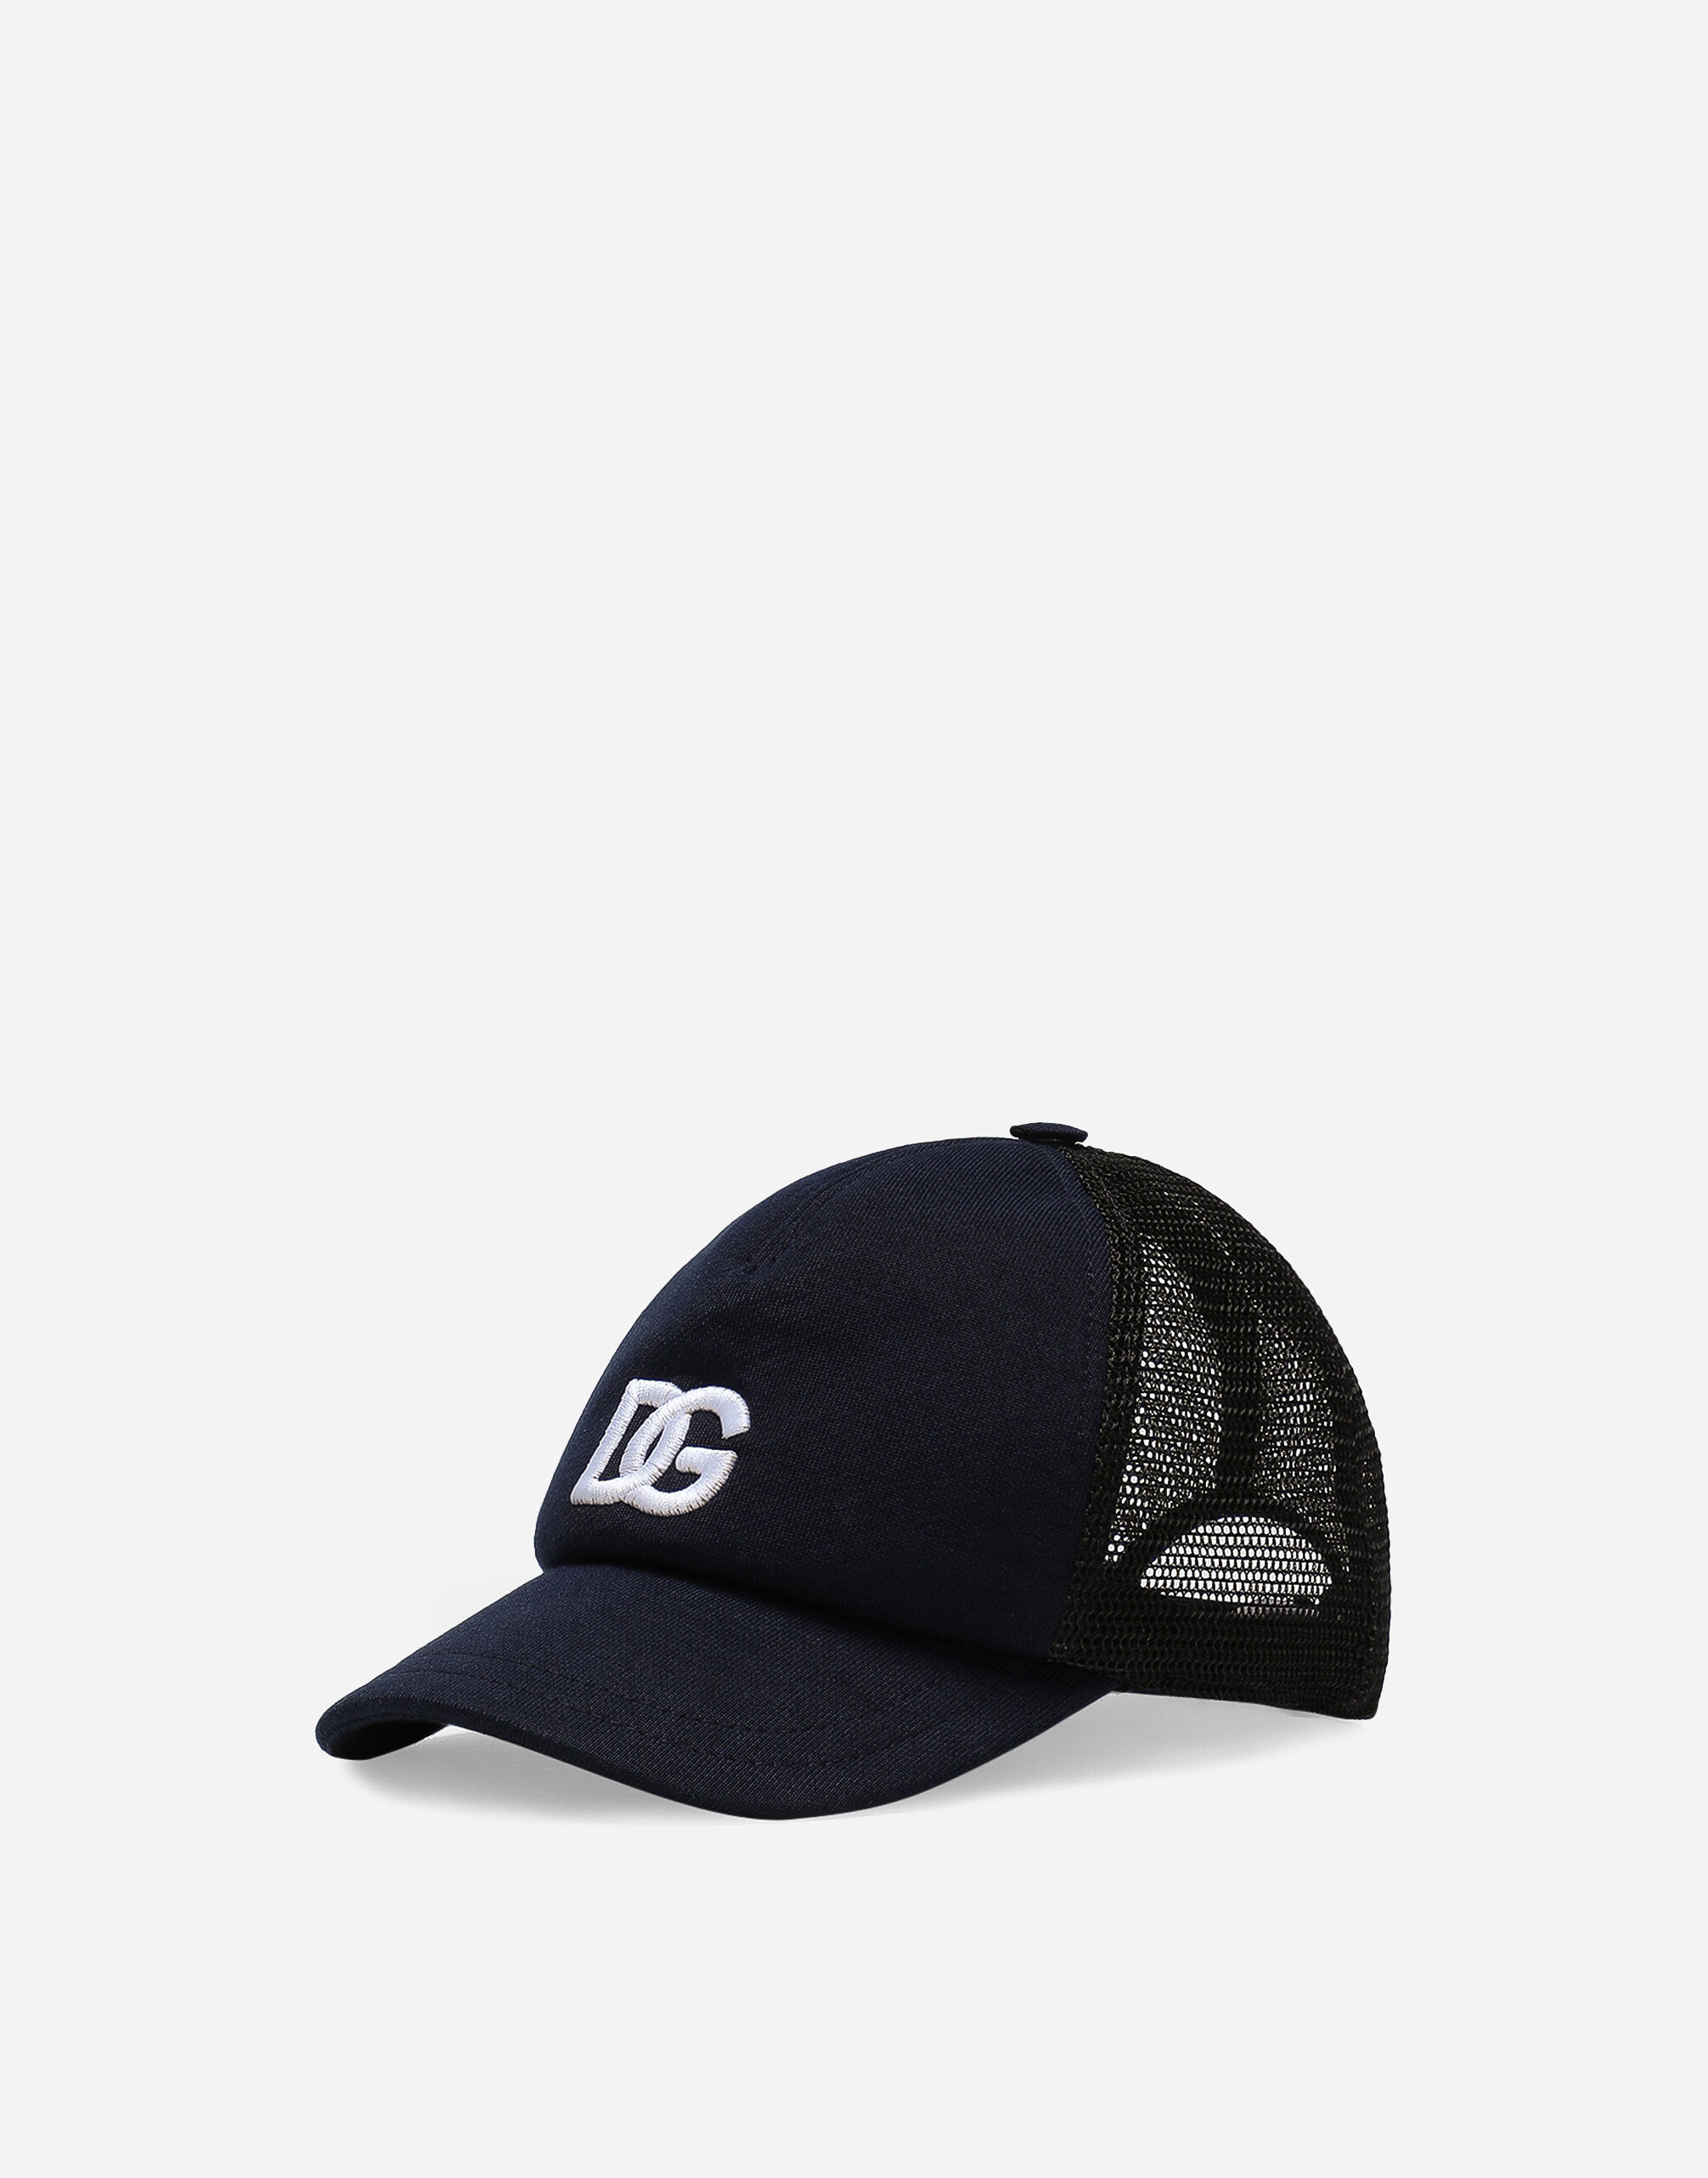 Dolce & Gabbana Cotton and mesh hat with peak and DG logo Print G8PB8THI70H